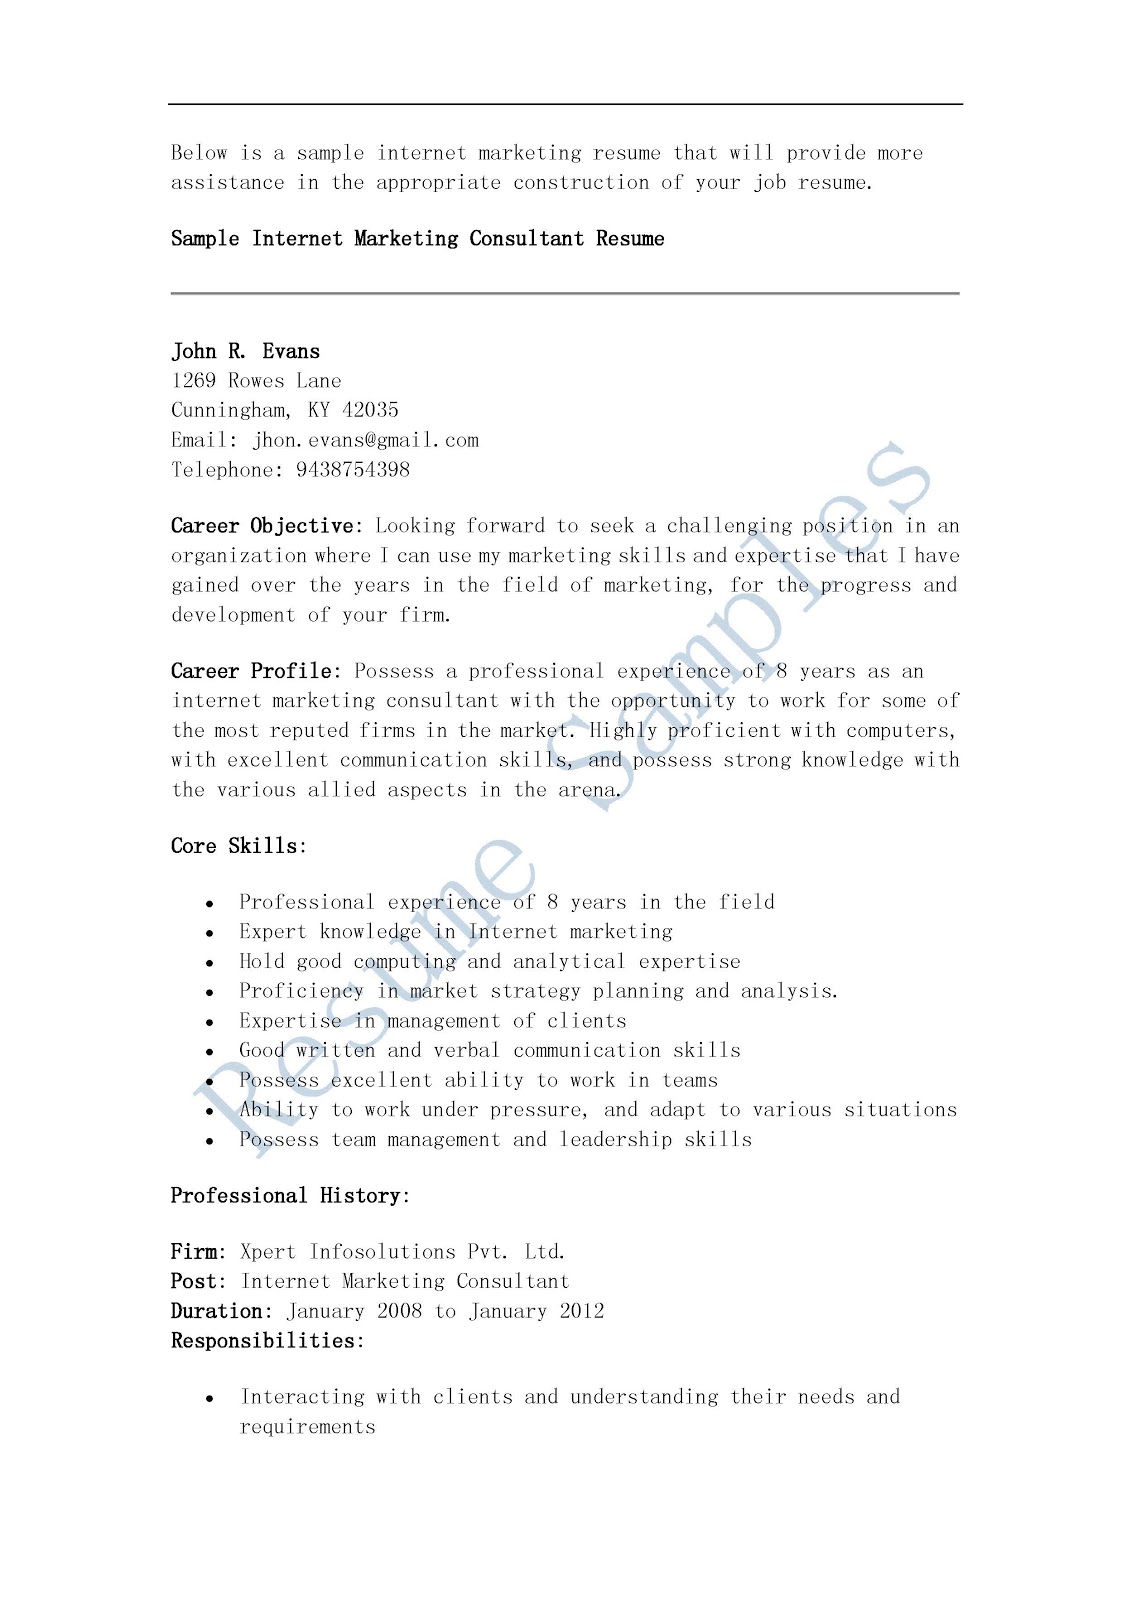 resume samples  internet marketing consultant resume